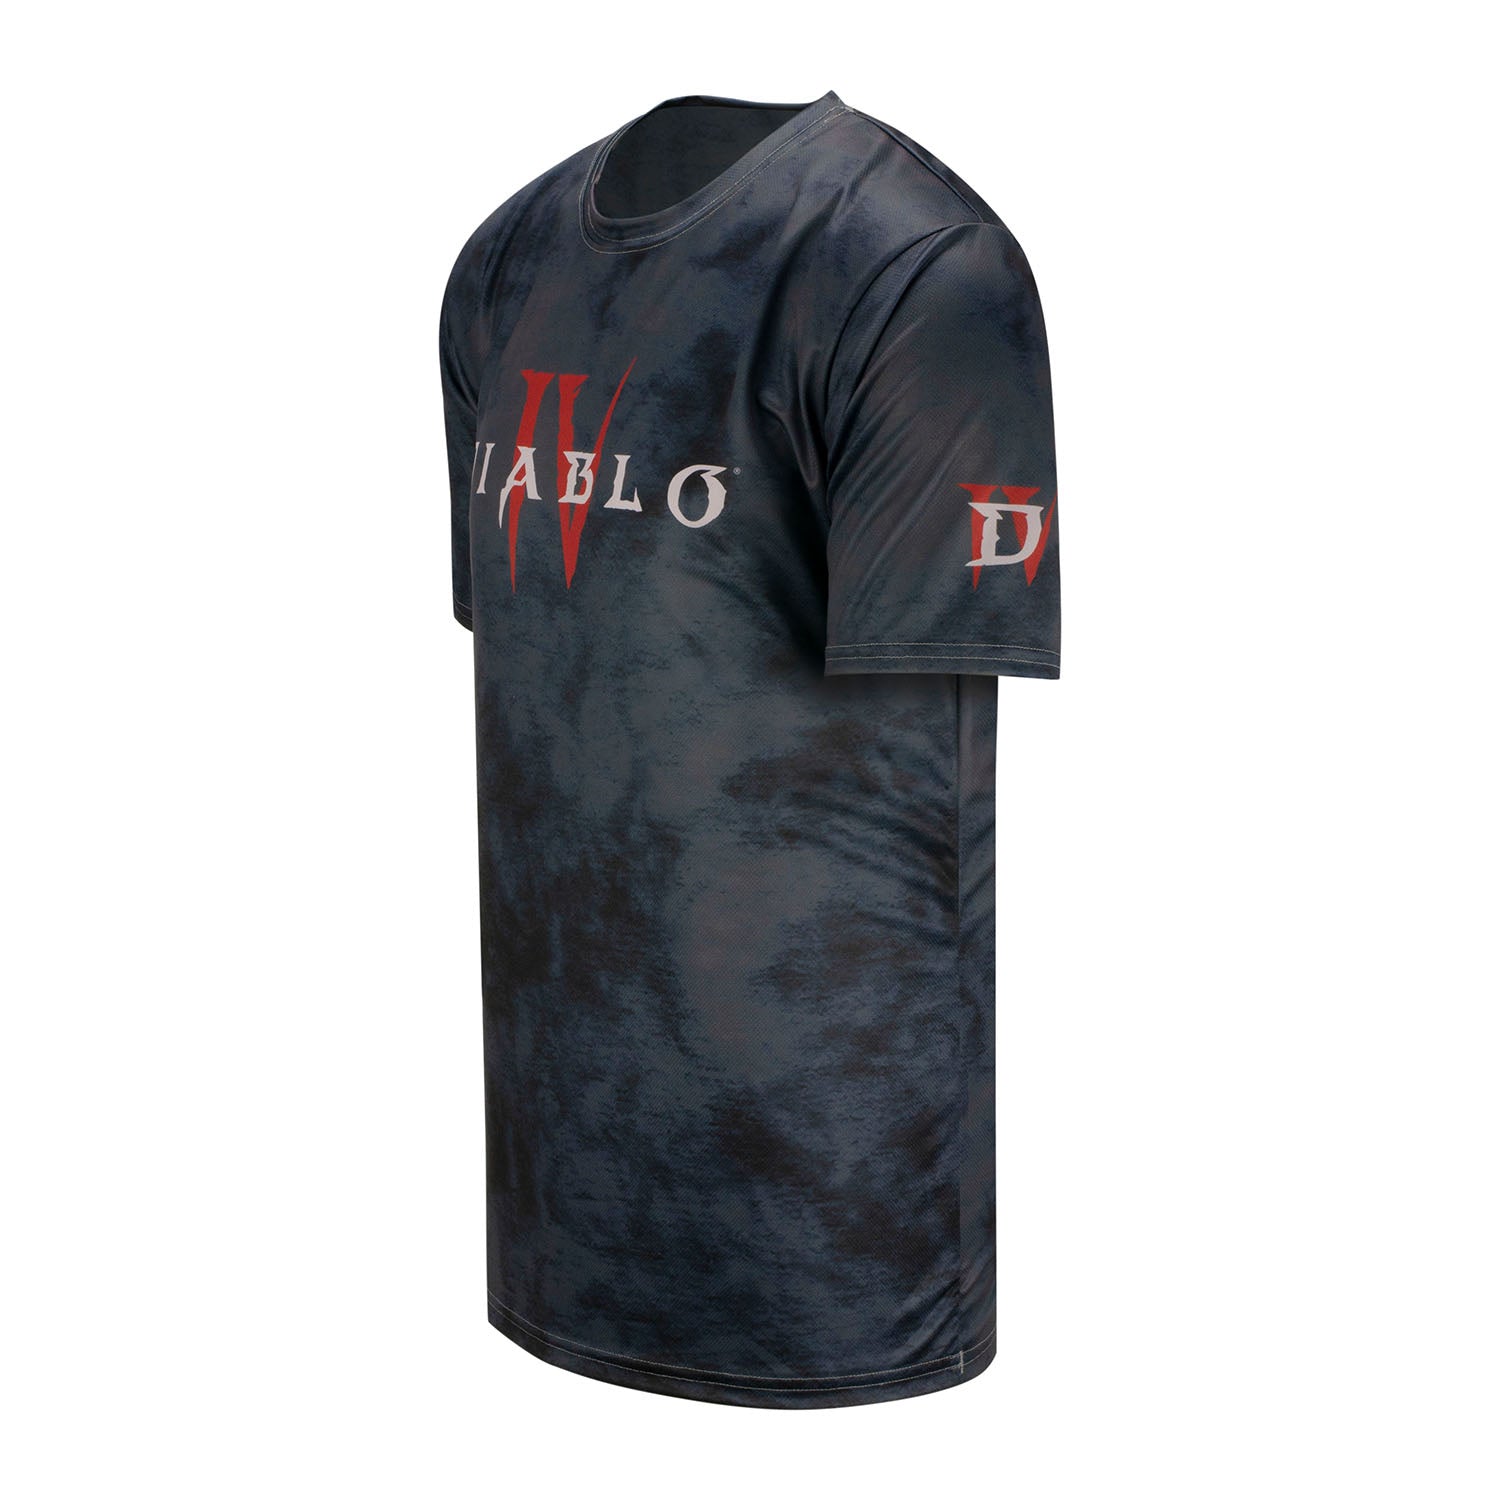 Diablo IV Smoke T-Shirt in Black - Left View